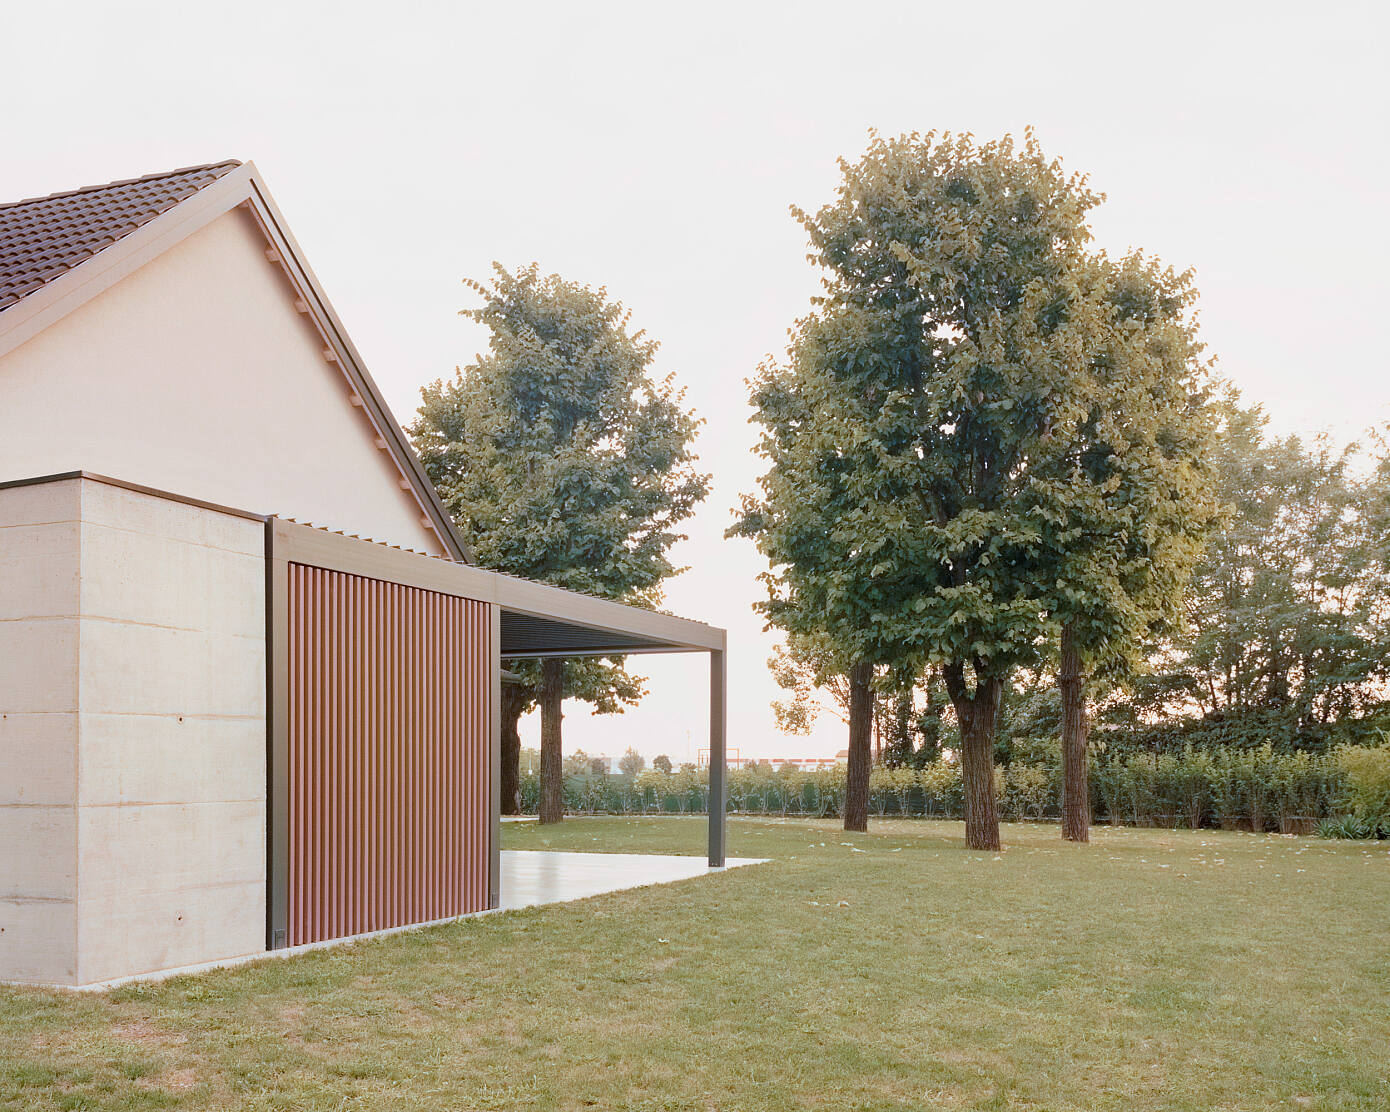 House AJ by Didonè Comacchio Architects